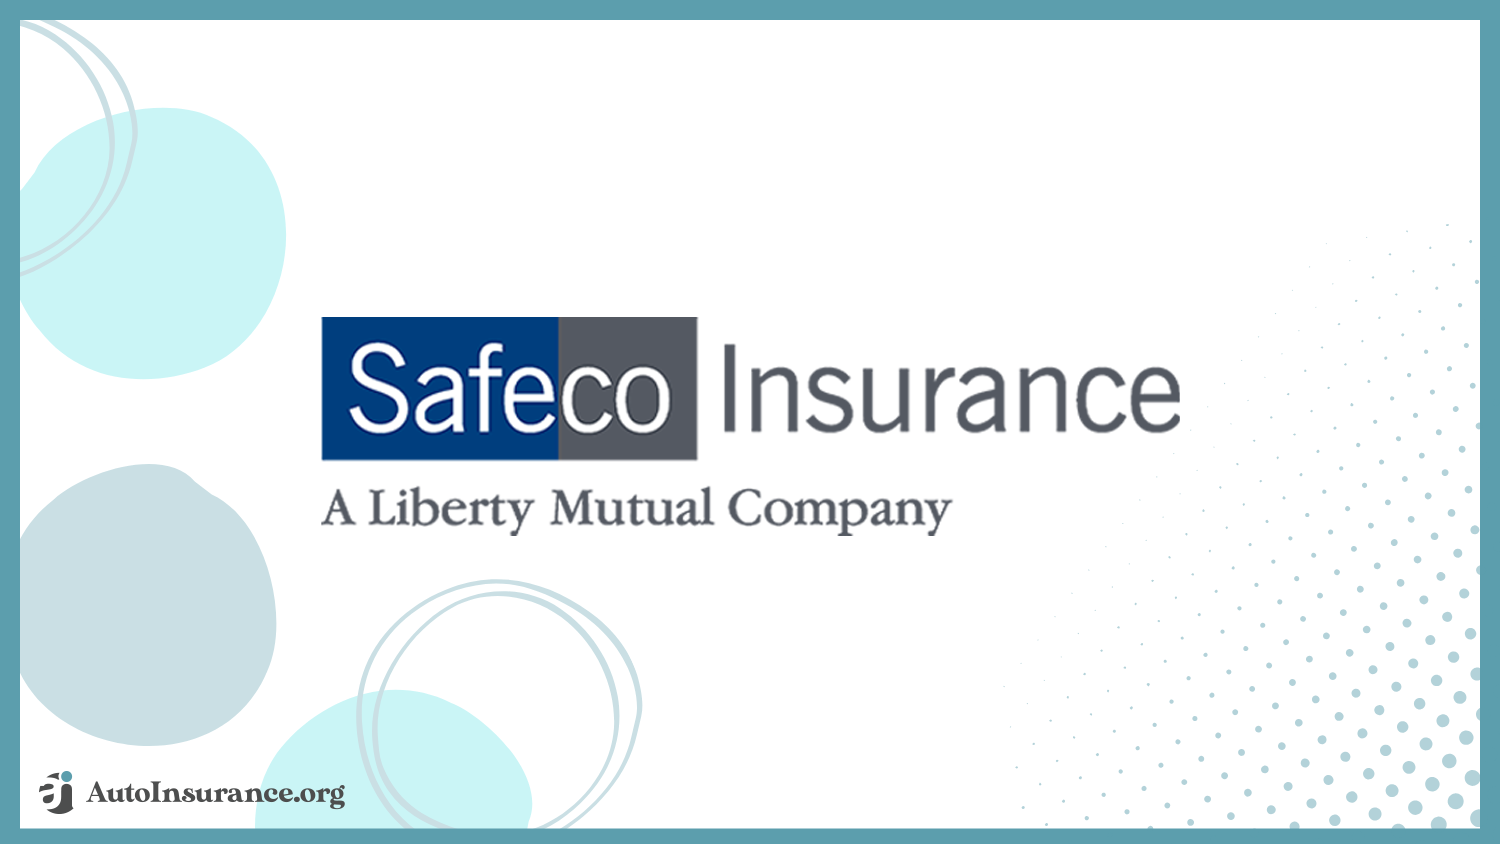 Safeco cheap lexus auto insurance